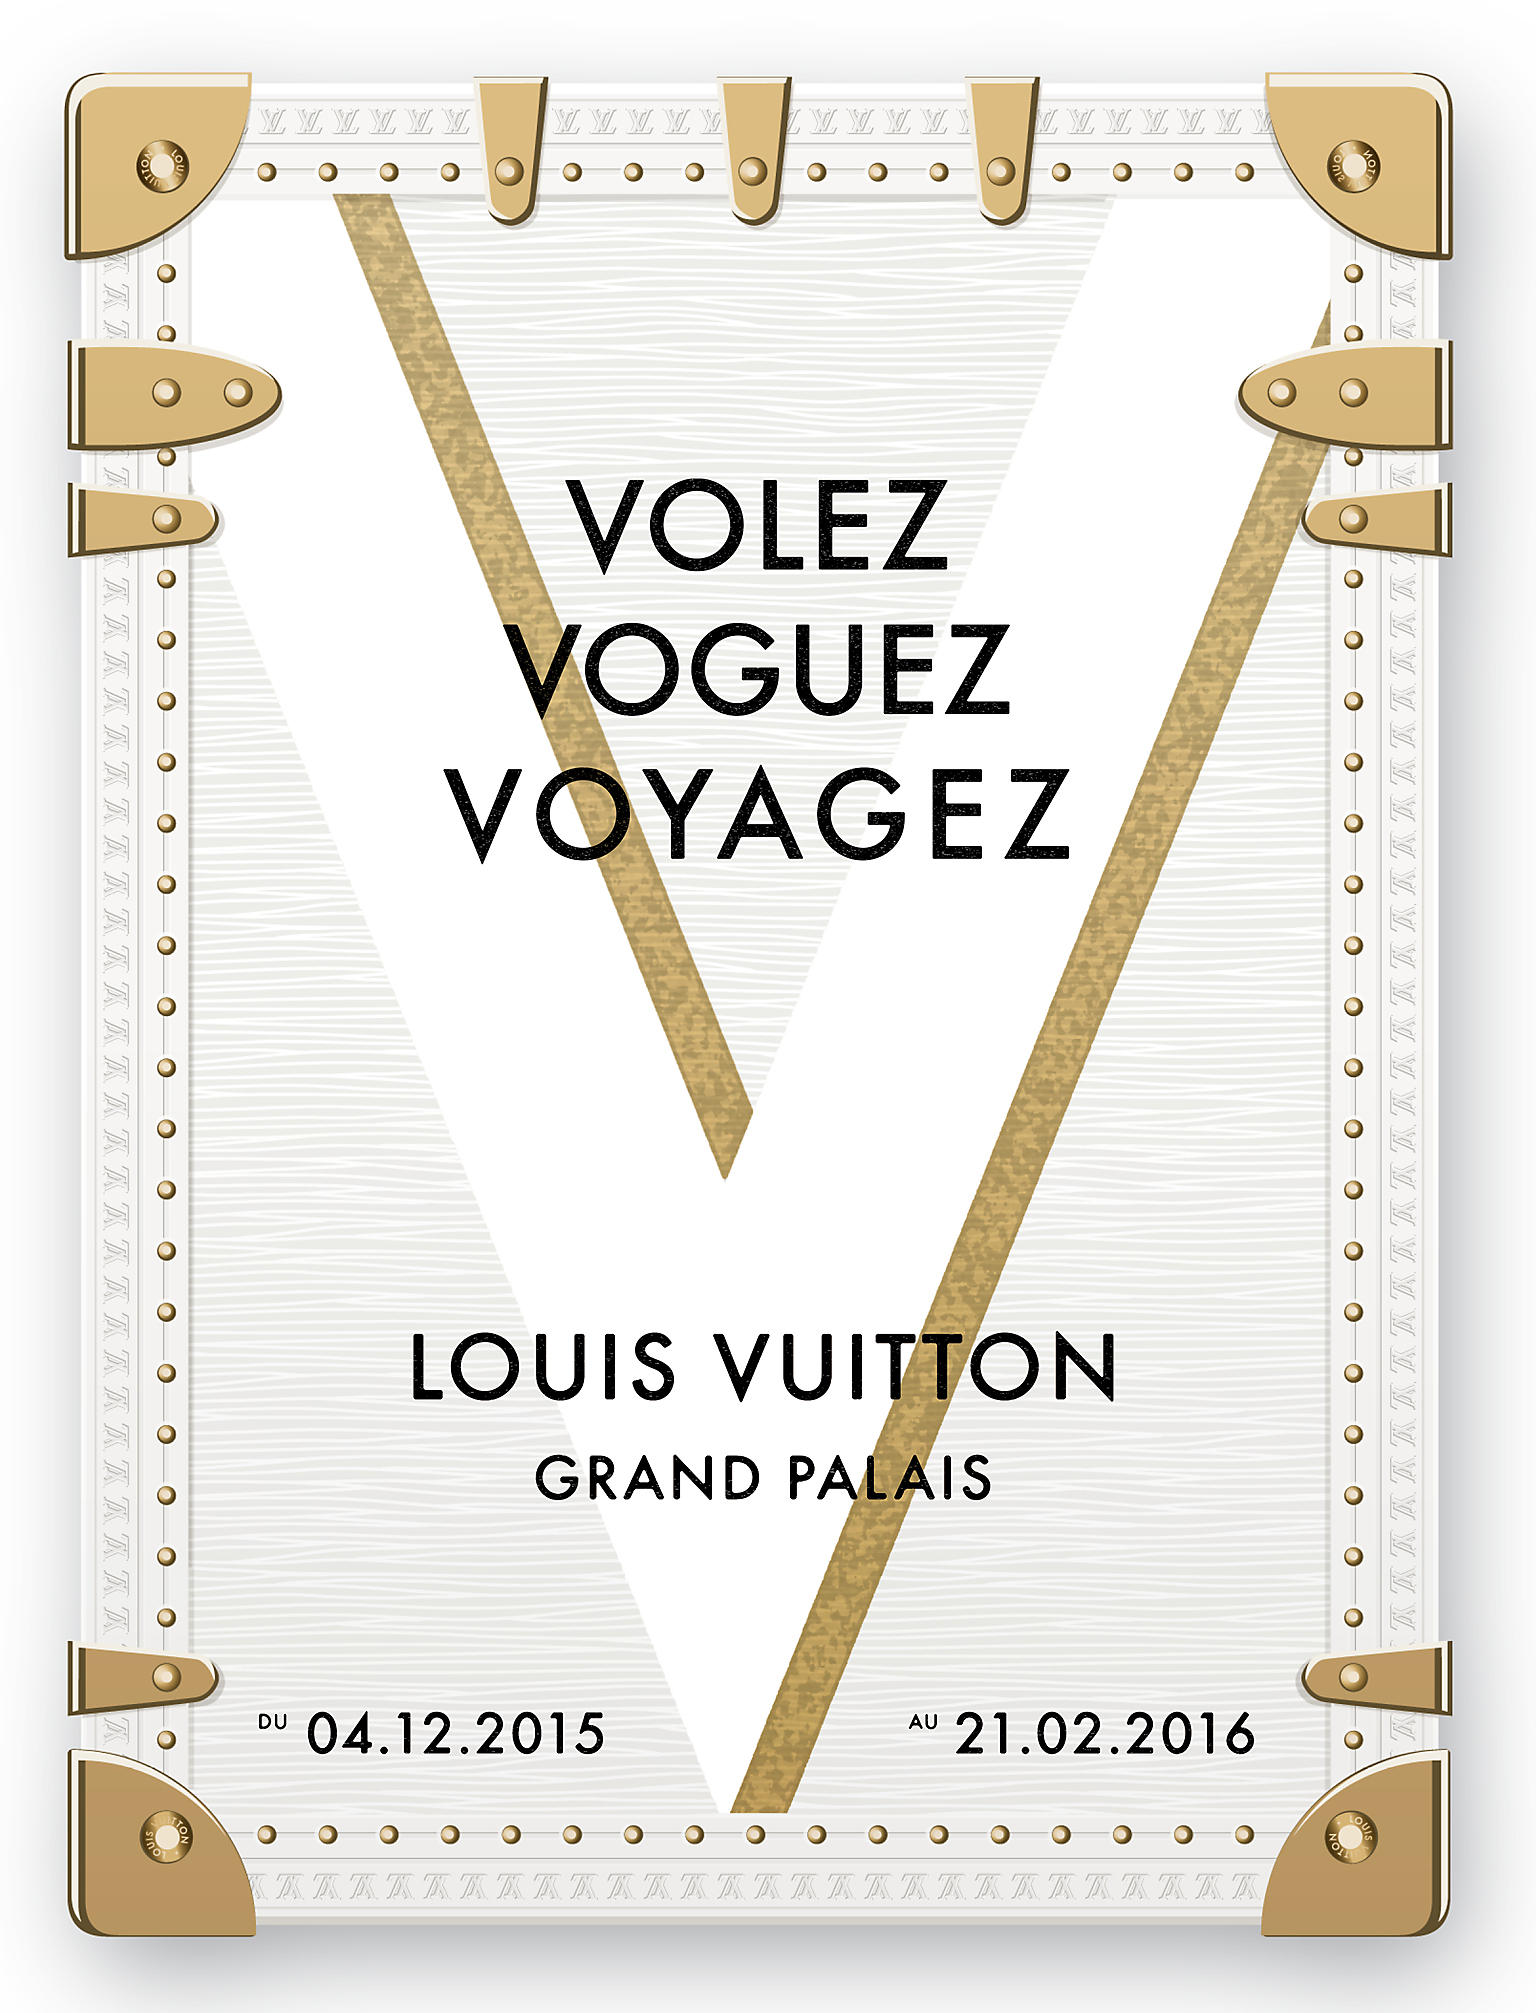 Louis Vuitton raconte sa « Never Ending Story » au Grand Palais - Modzik